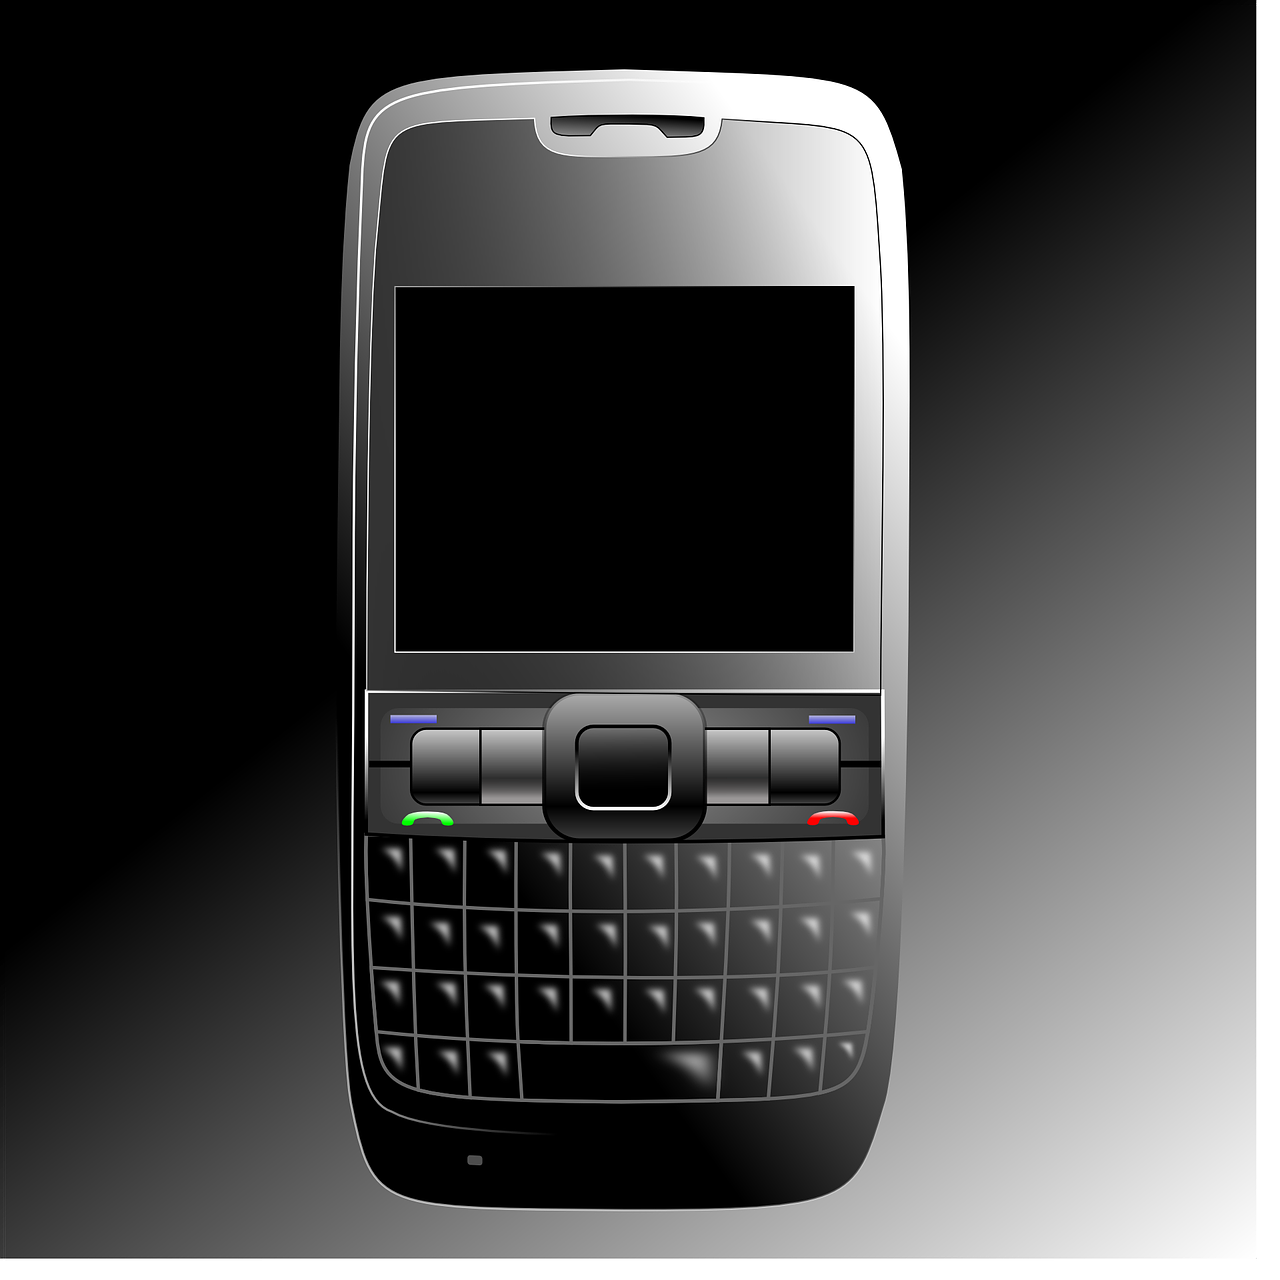 blackberry smartphone call free photo